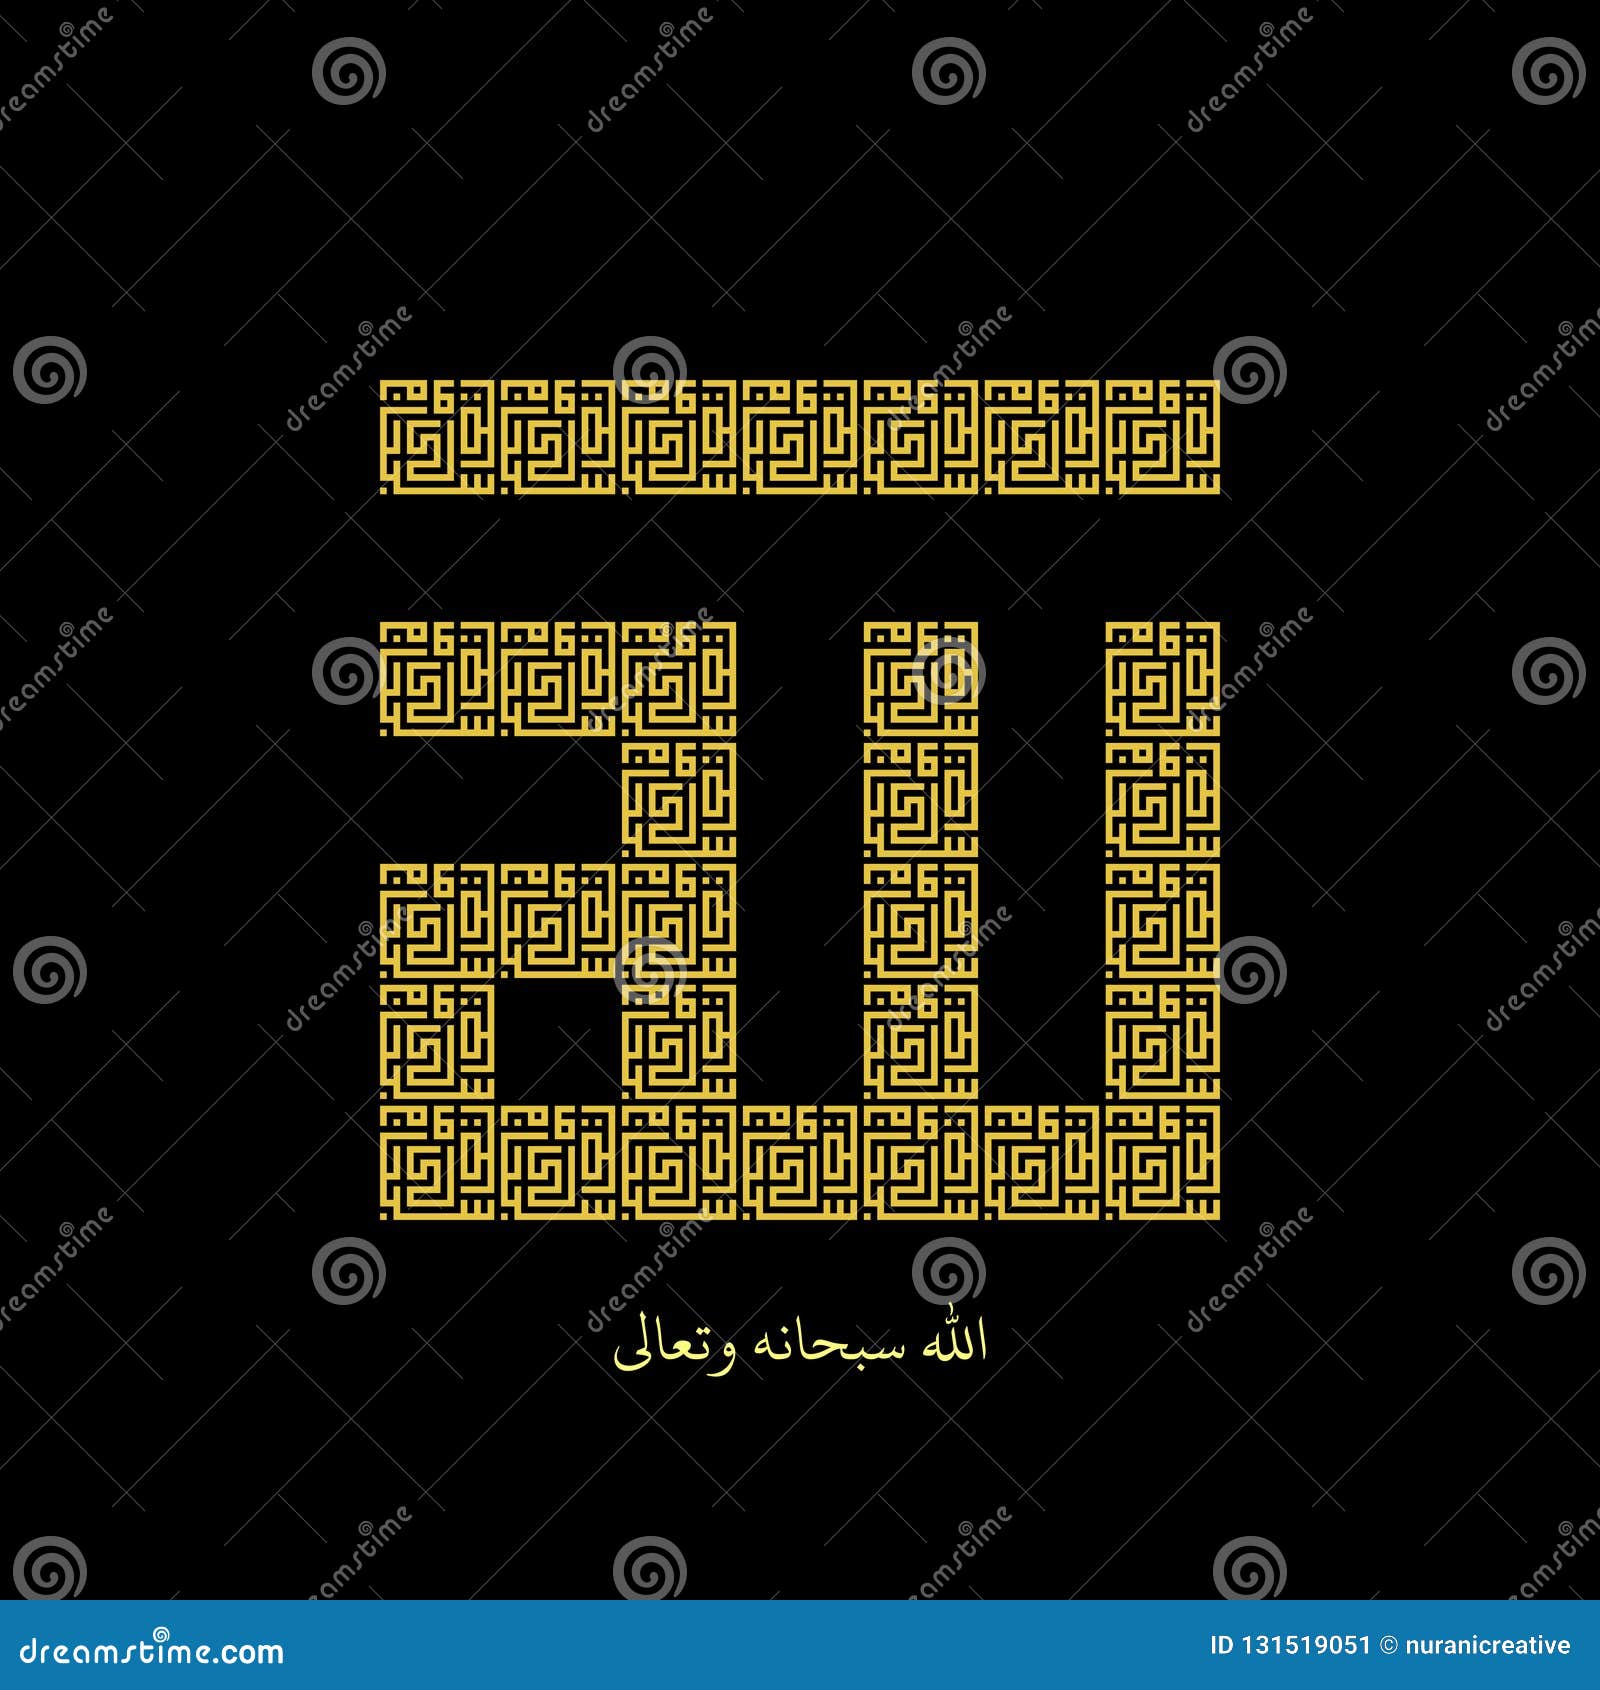 islamic calligraphy of allah, kufi art